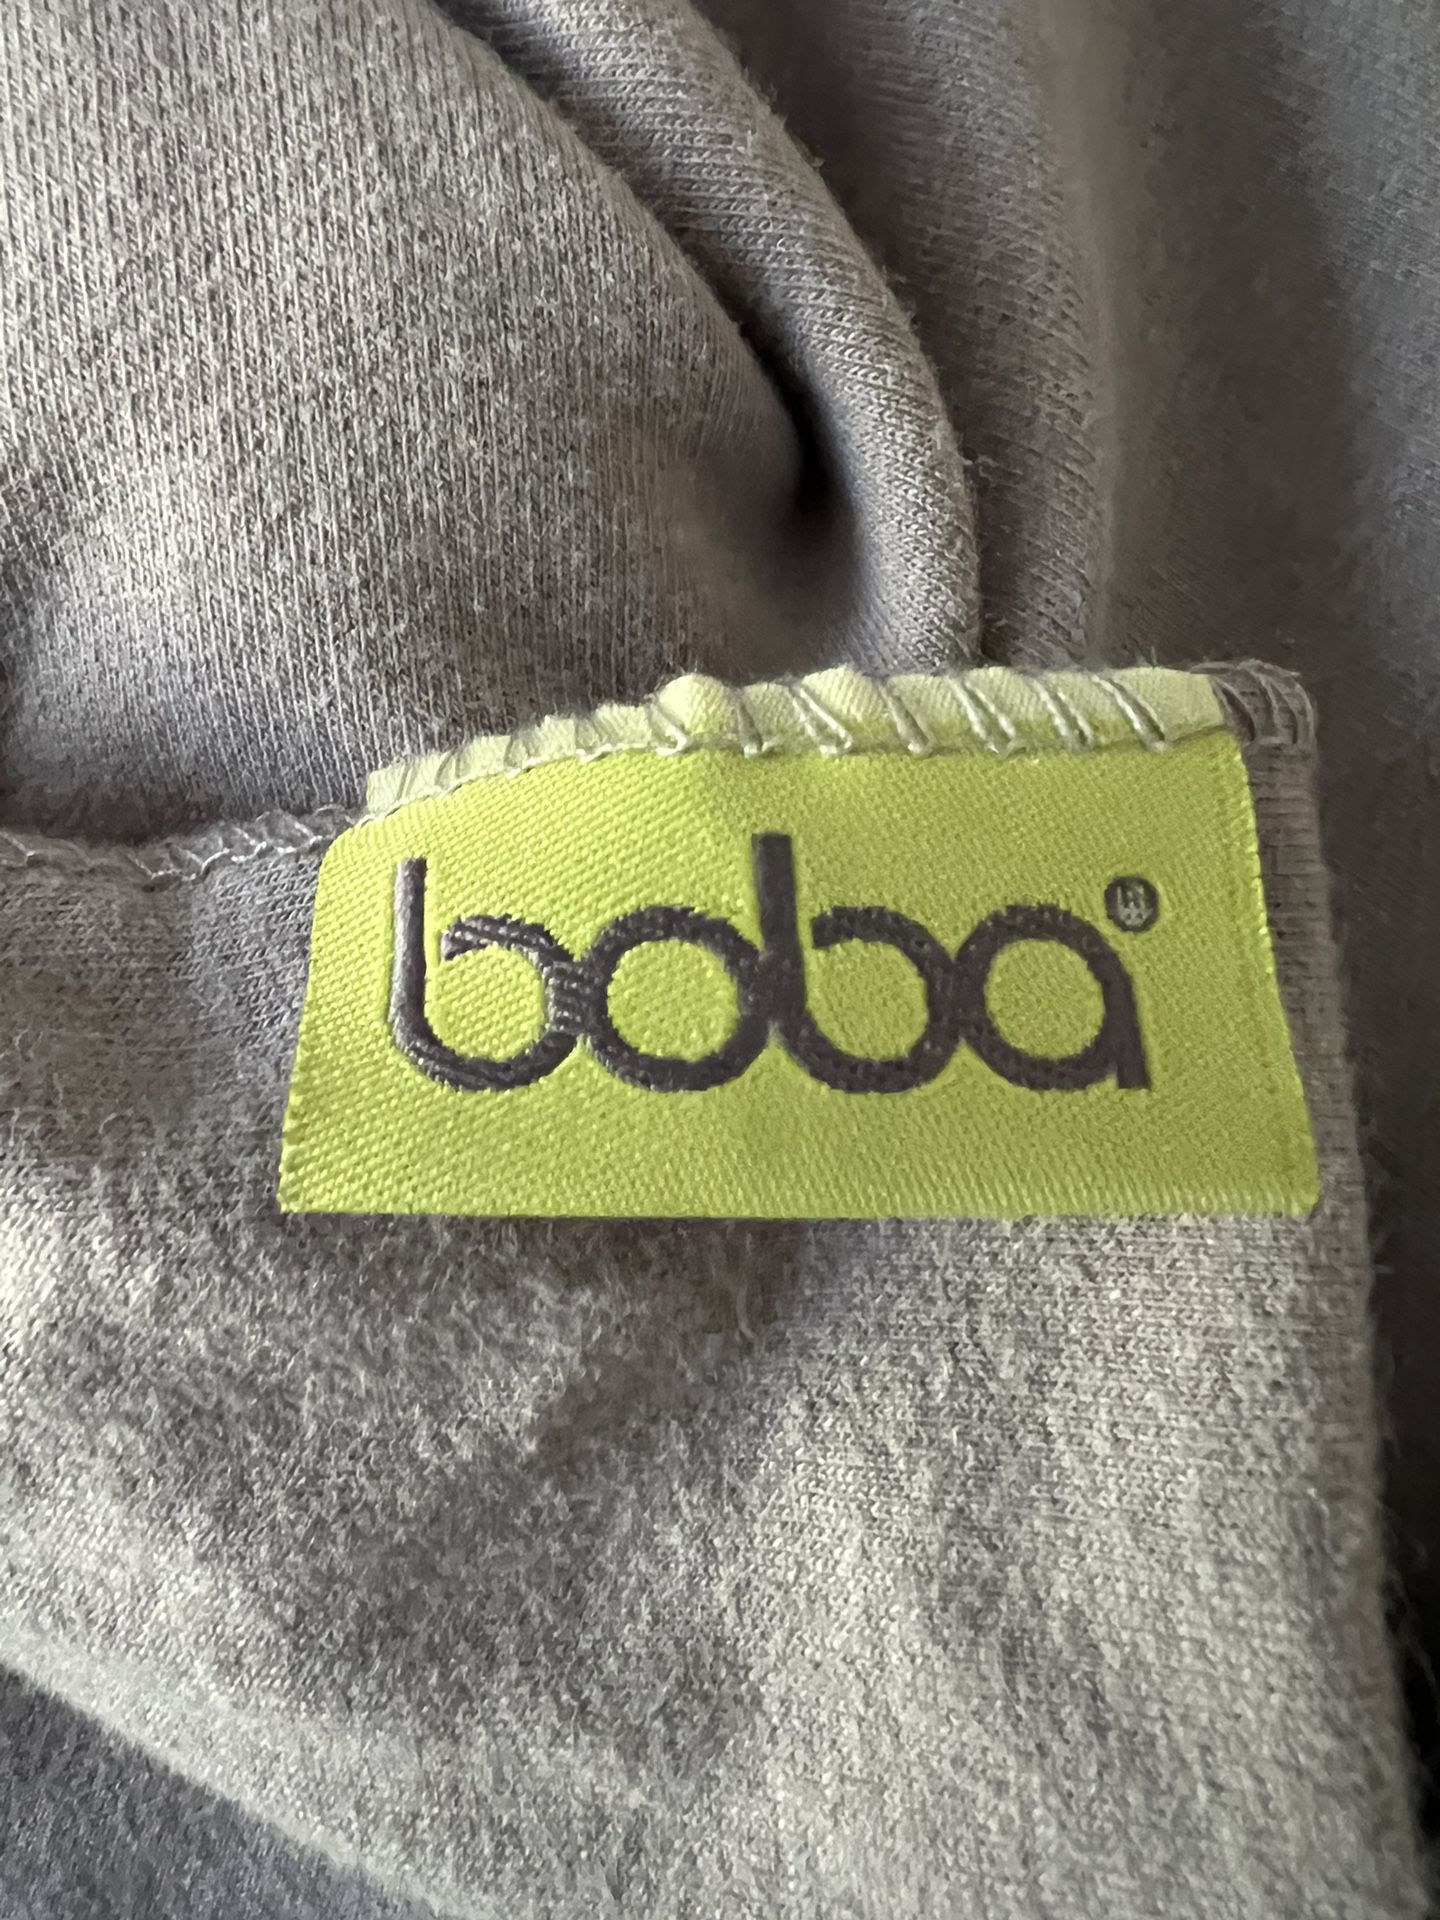 Boba Baby Wrap/Carrier